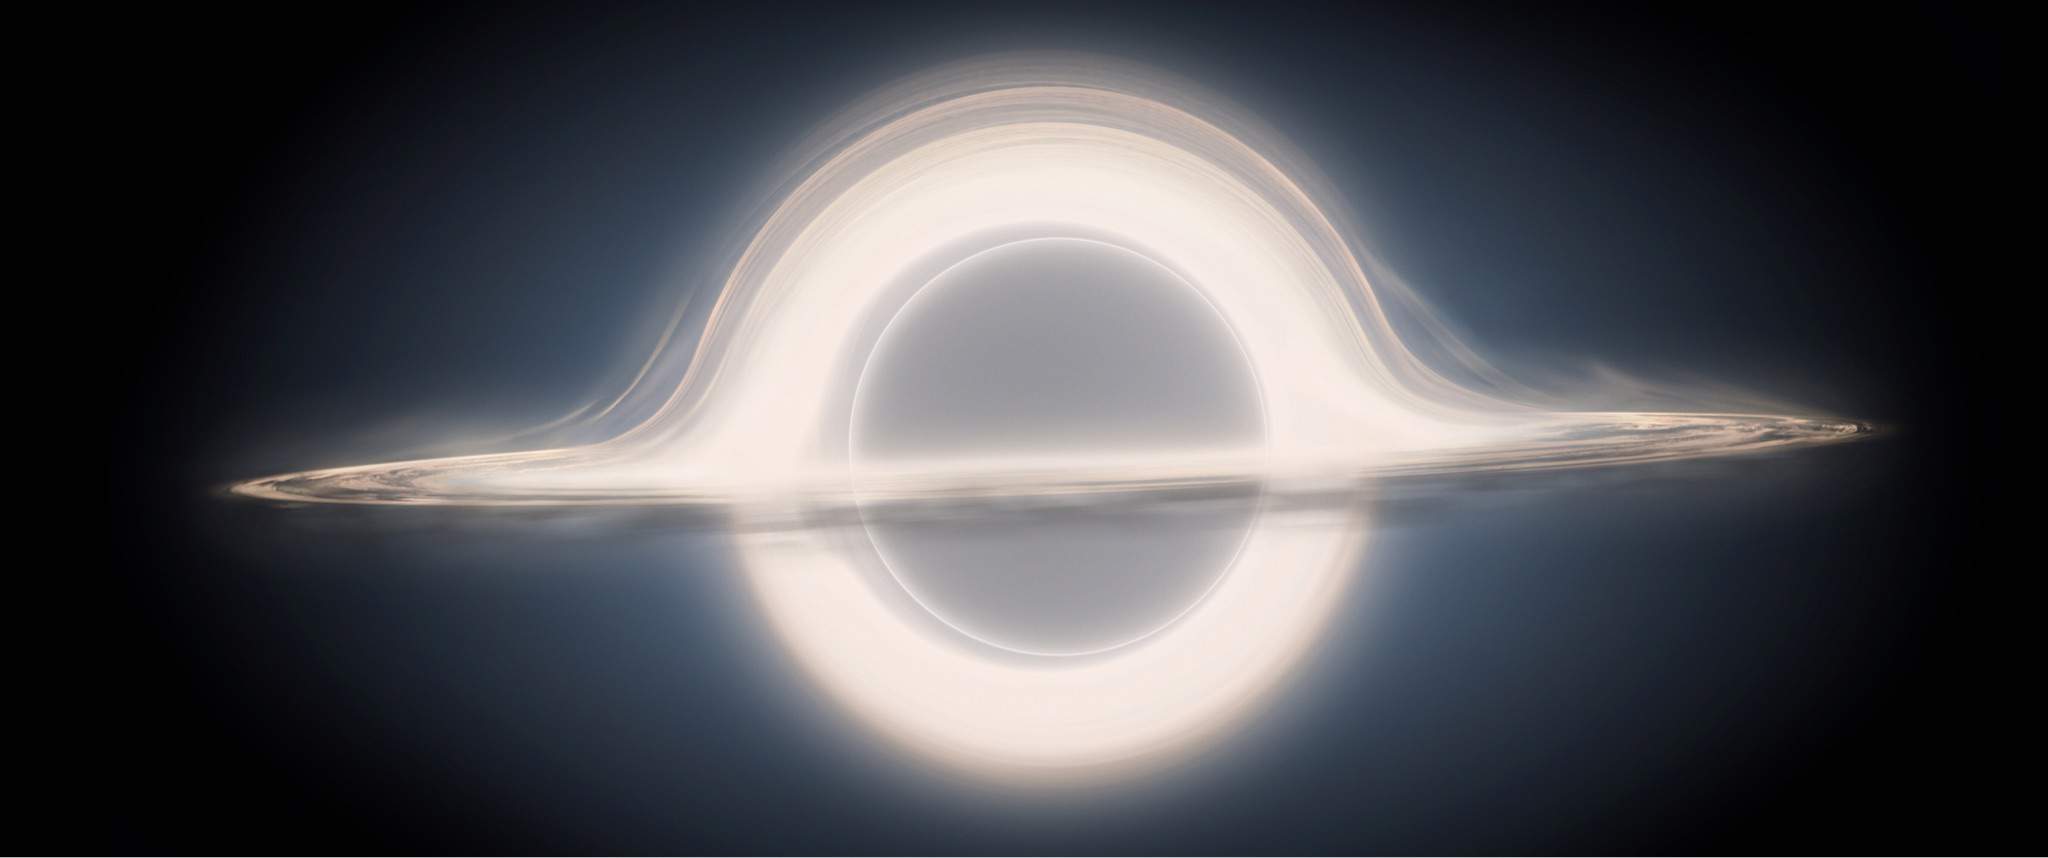 Why Interstellar’s Gargantua Looked Like "That" Space Amino